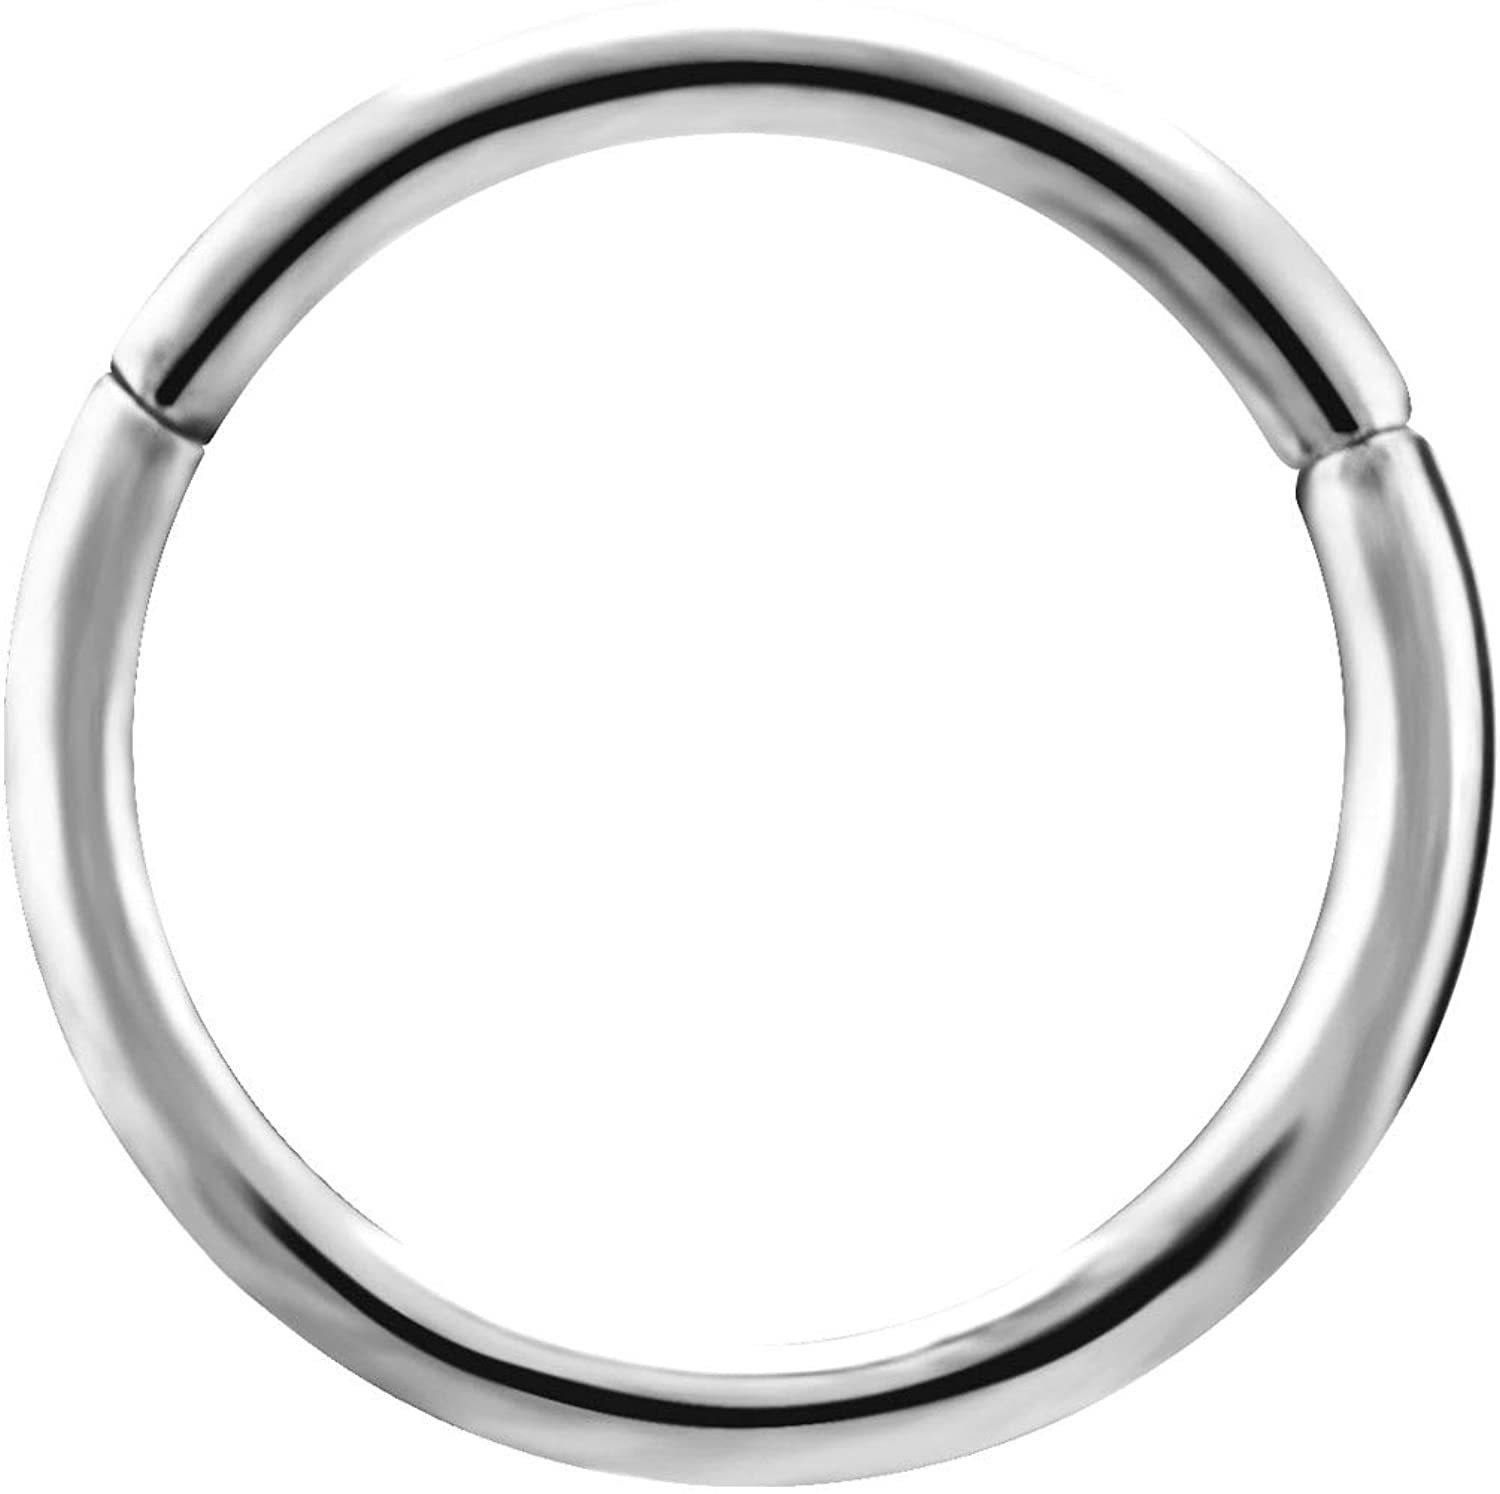 Karisma Hinged Ohrring Silber Piercing Charnier/Septum G23 Ring Helix Clicker Piercing-Set - Karisma Segmentring Titan 1,0x7mm